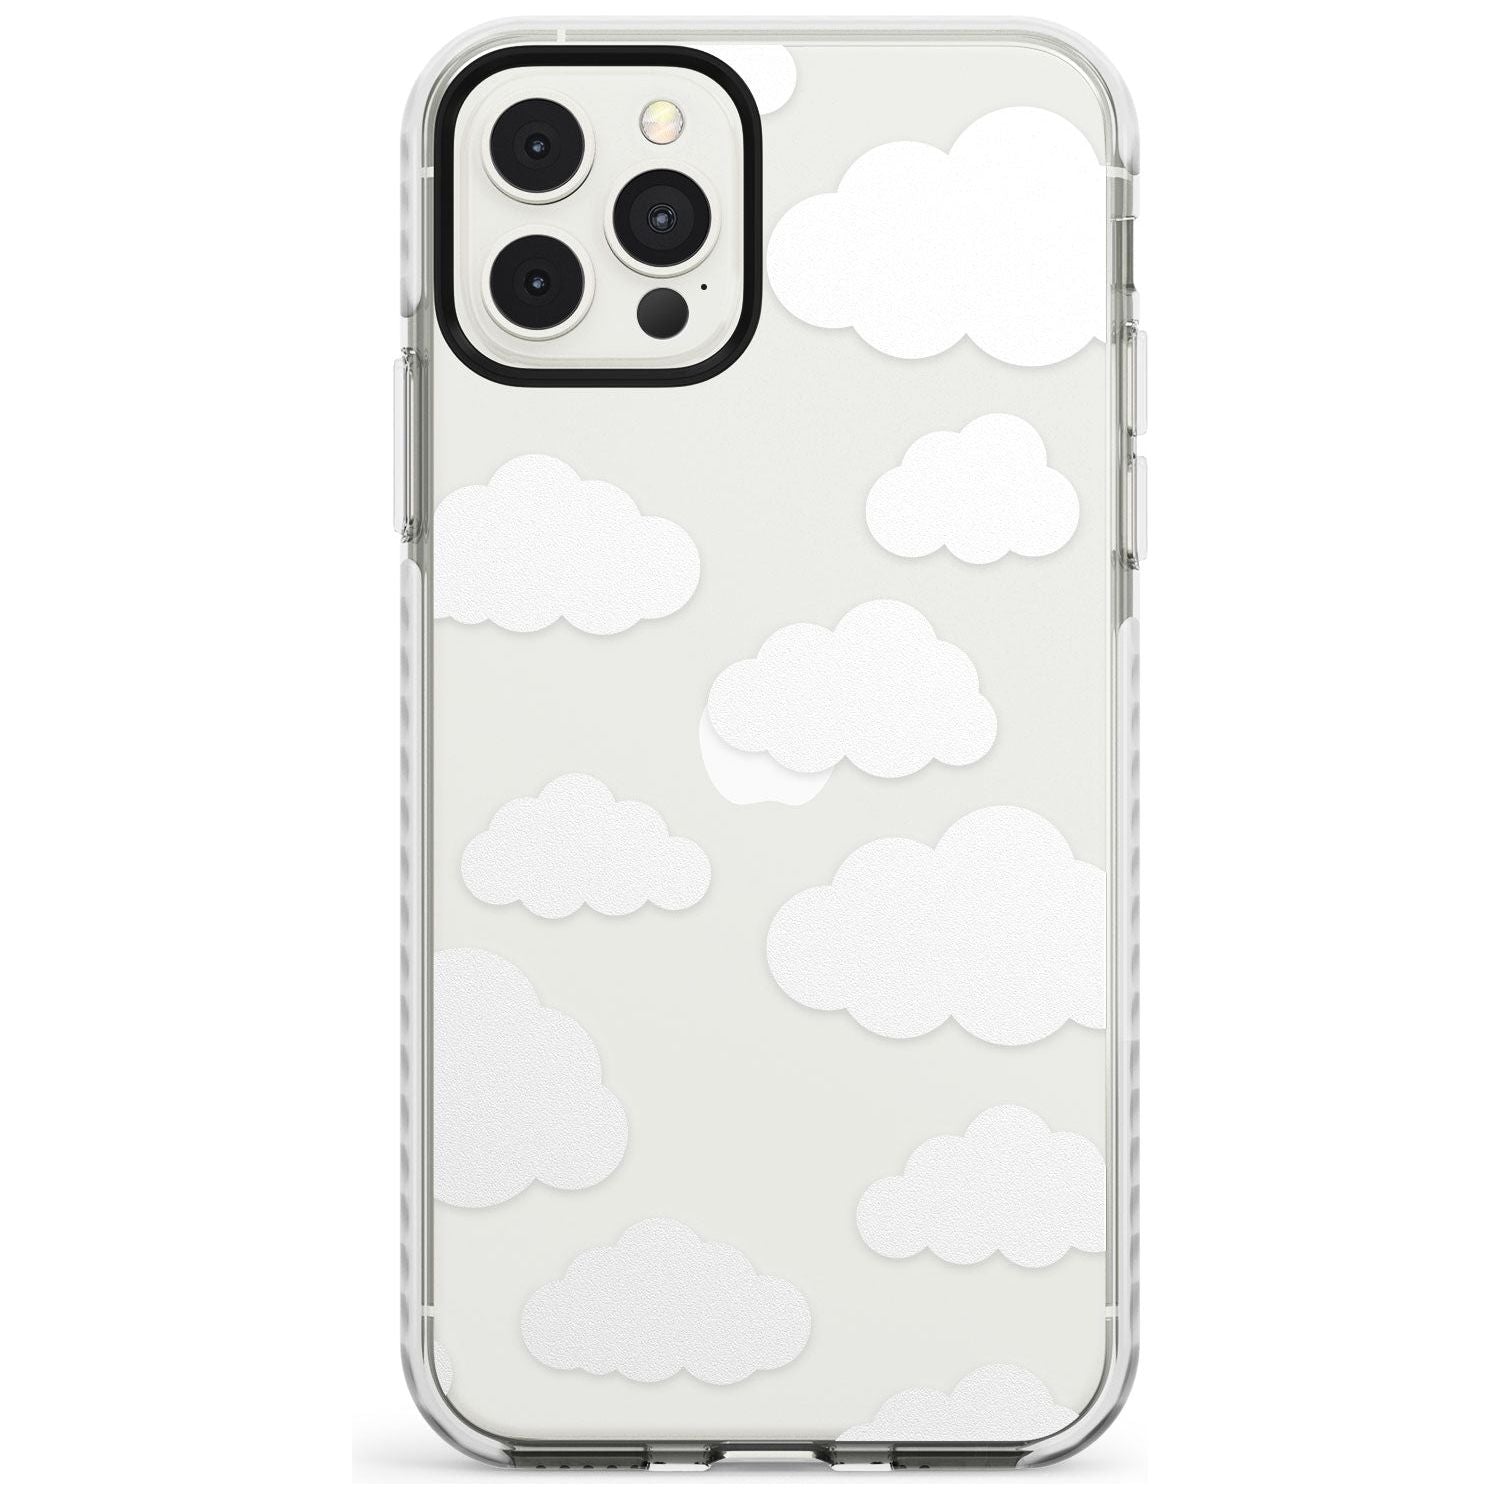 Transparent Cloud Pattern Slim TPU Phone Case for iPhone 11 Pro Max